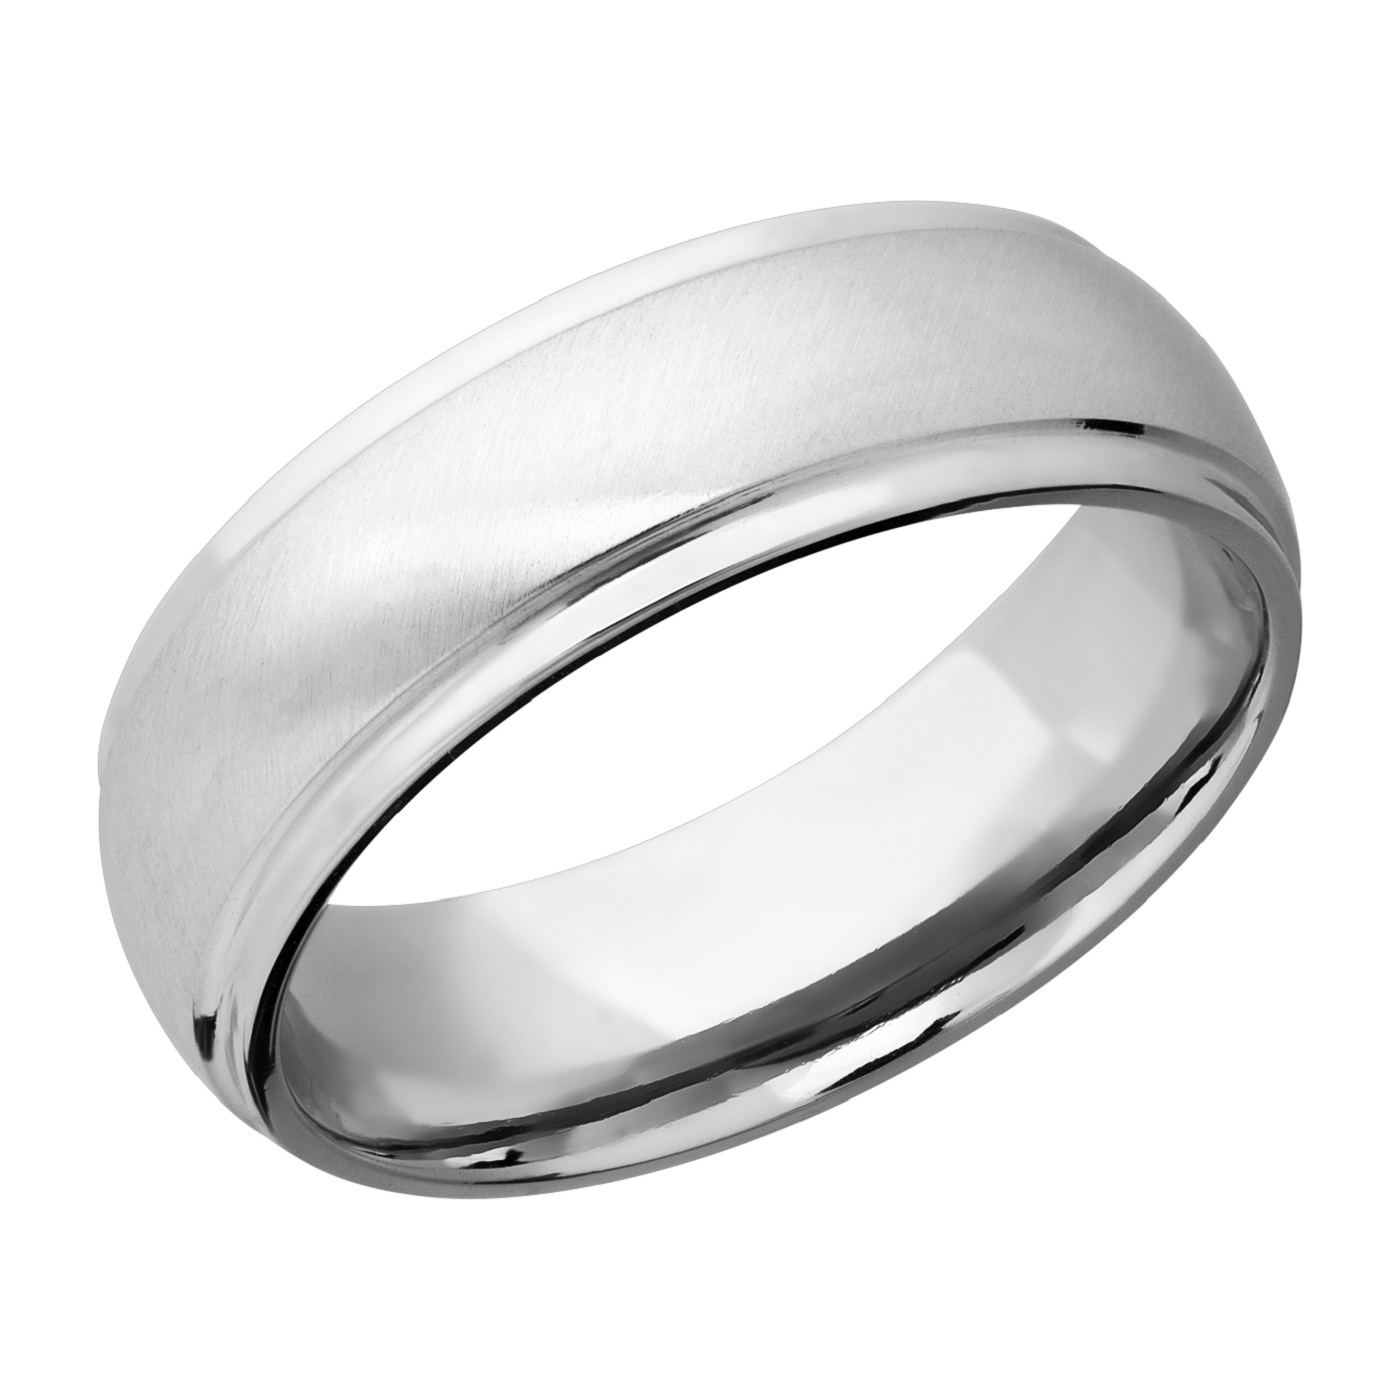 Cobalt Chrome Wedding band by Lashbrook Designs - Rings